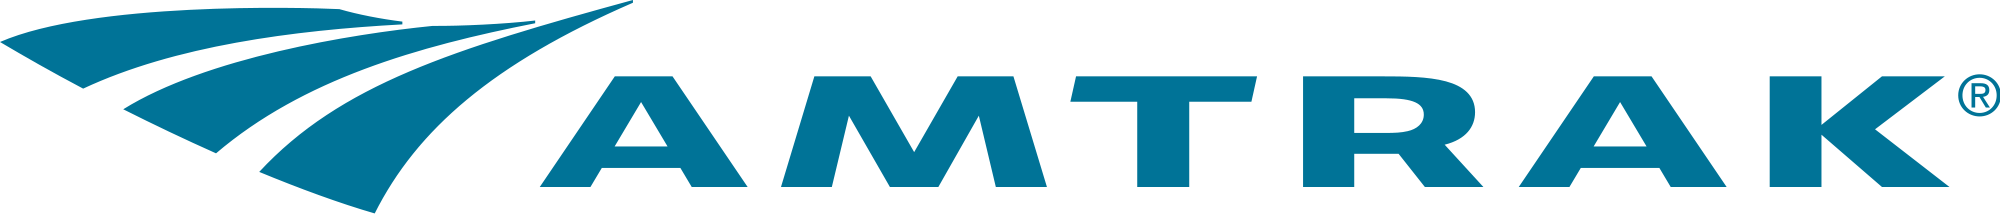 New_Amtrak_logo